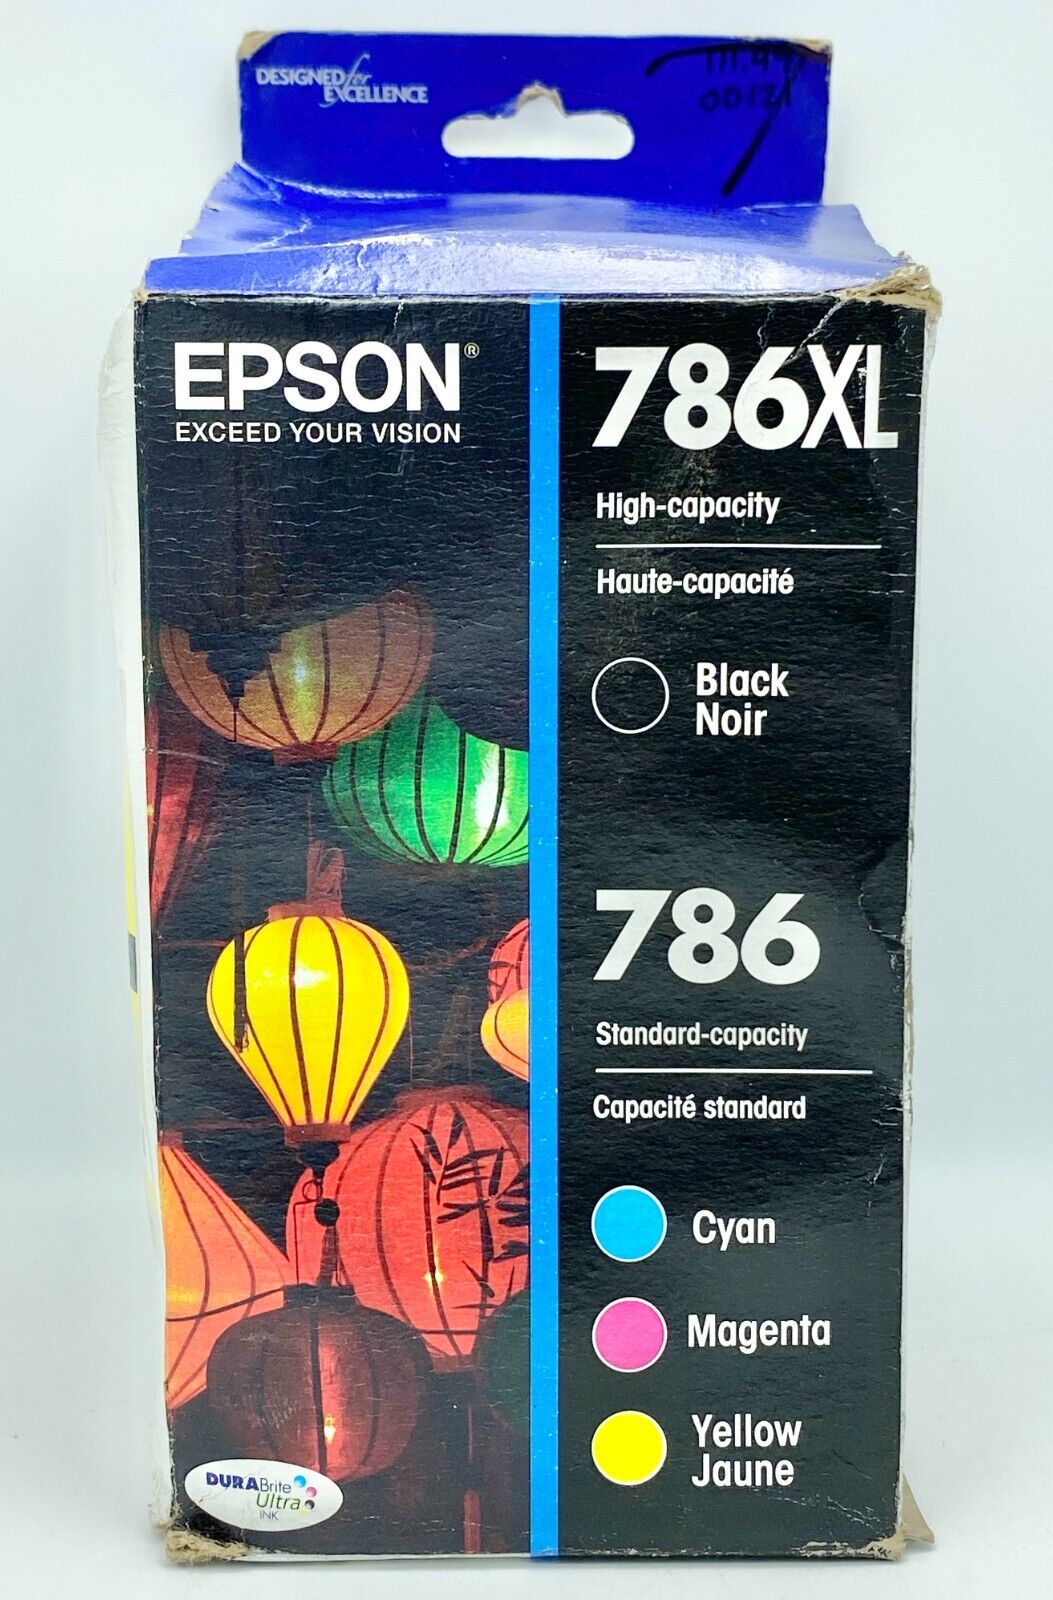 Epson 786 XL Black Noir + 786 Tri-Color Ink Sealed EXP.12/21